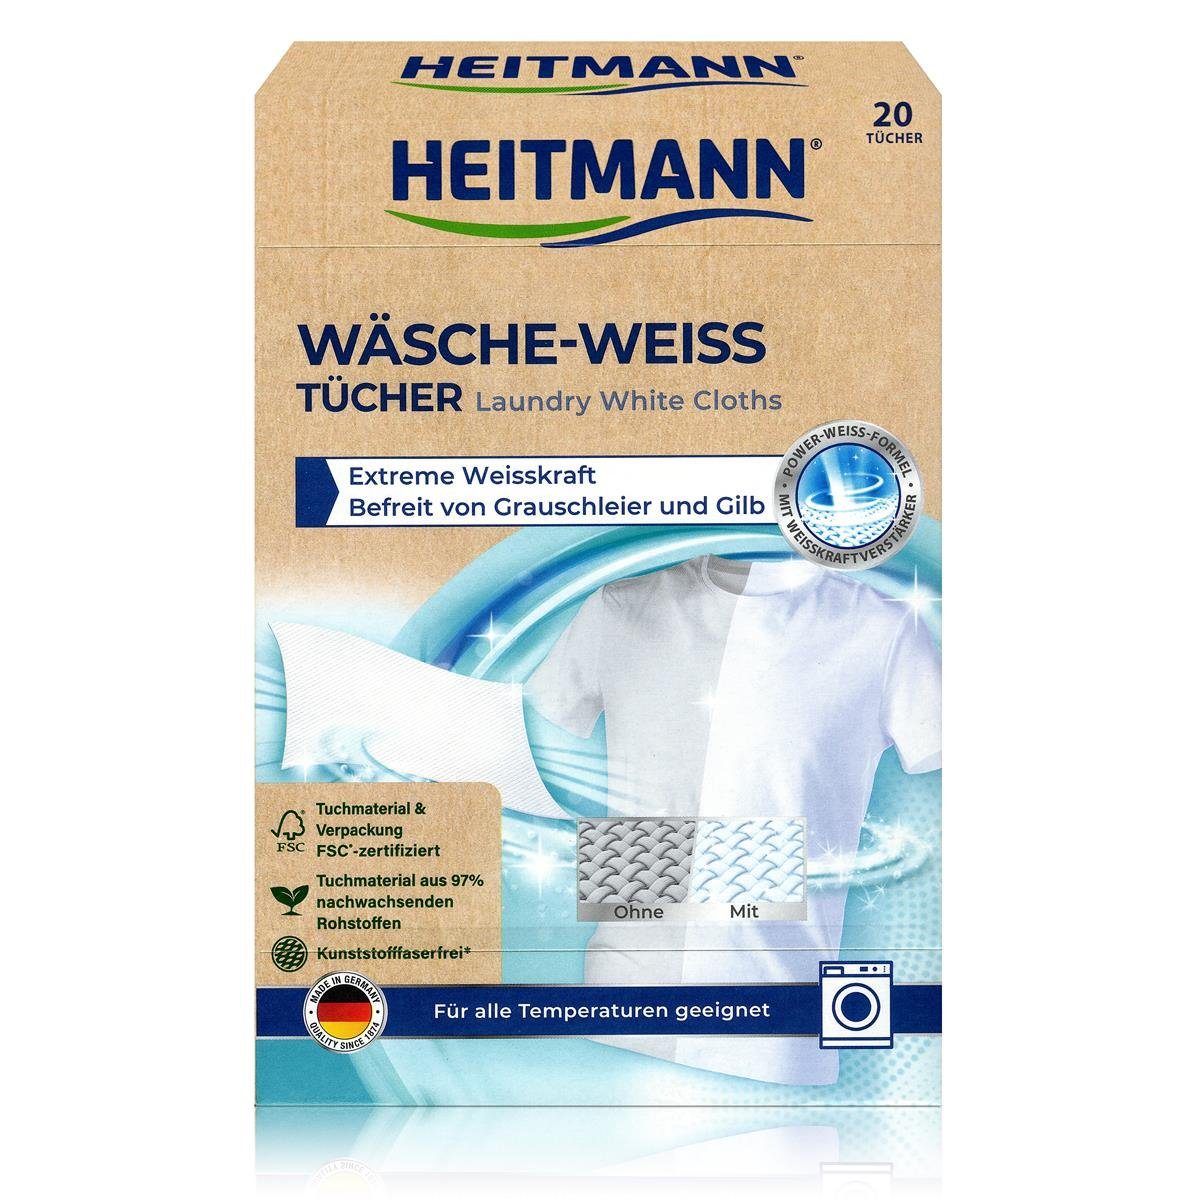 HEITMANN Textilfarbe Heitmann Wäsche Weiss Tücher (20 Tücher) - Kraftvolles Weiß (1er Pack)